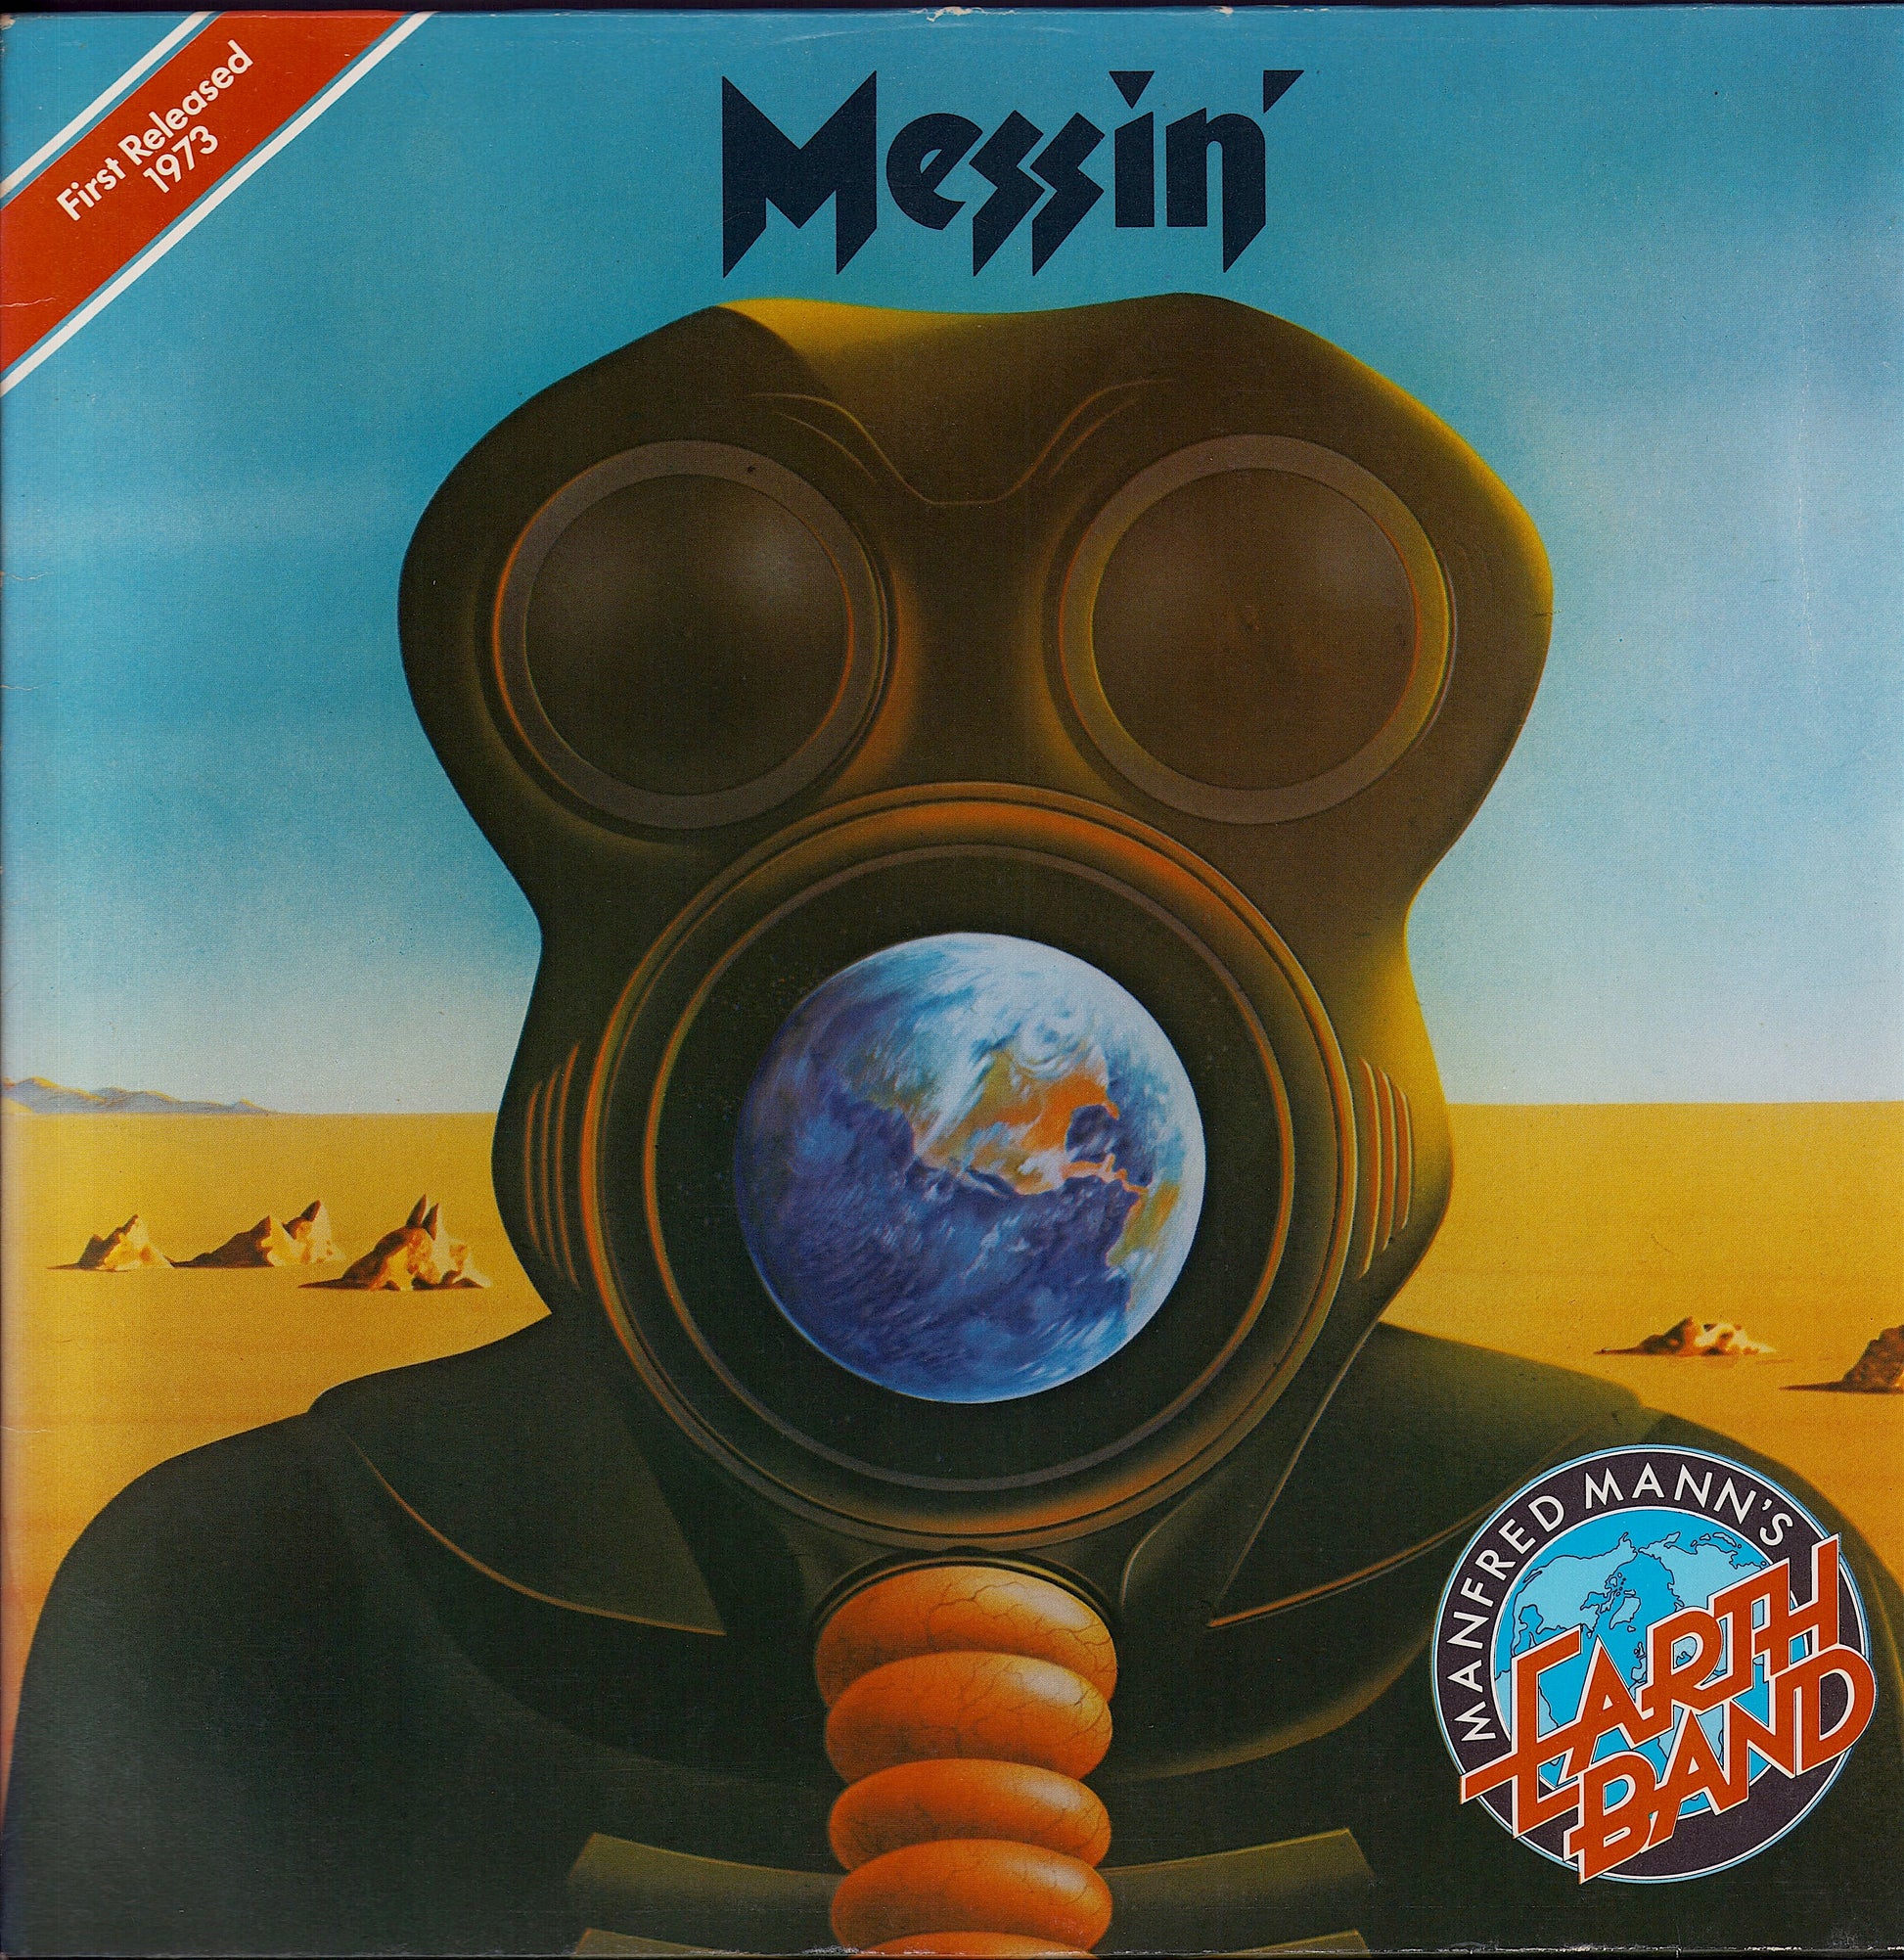 Manfred Mann's Earth Band - Messin' Vinyl LP